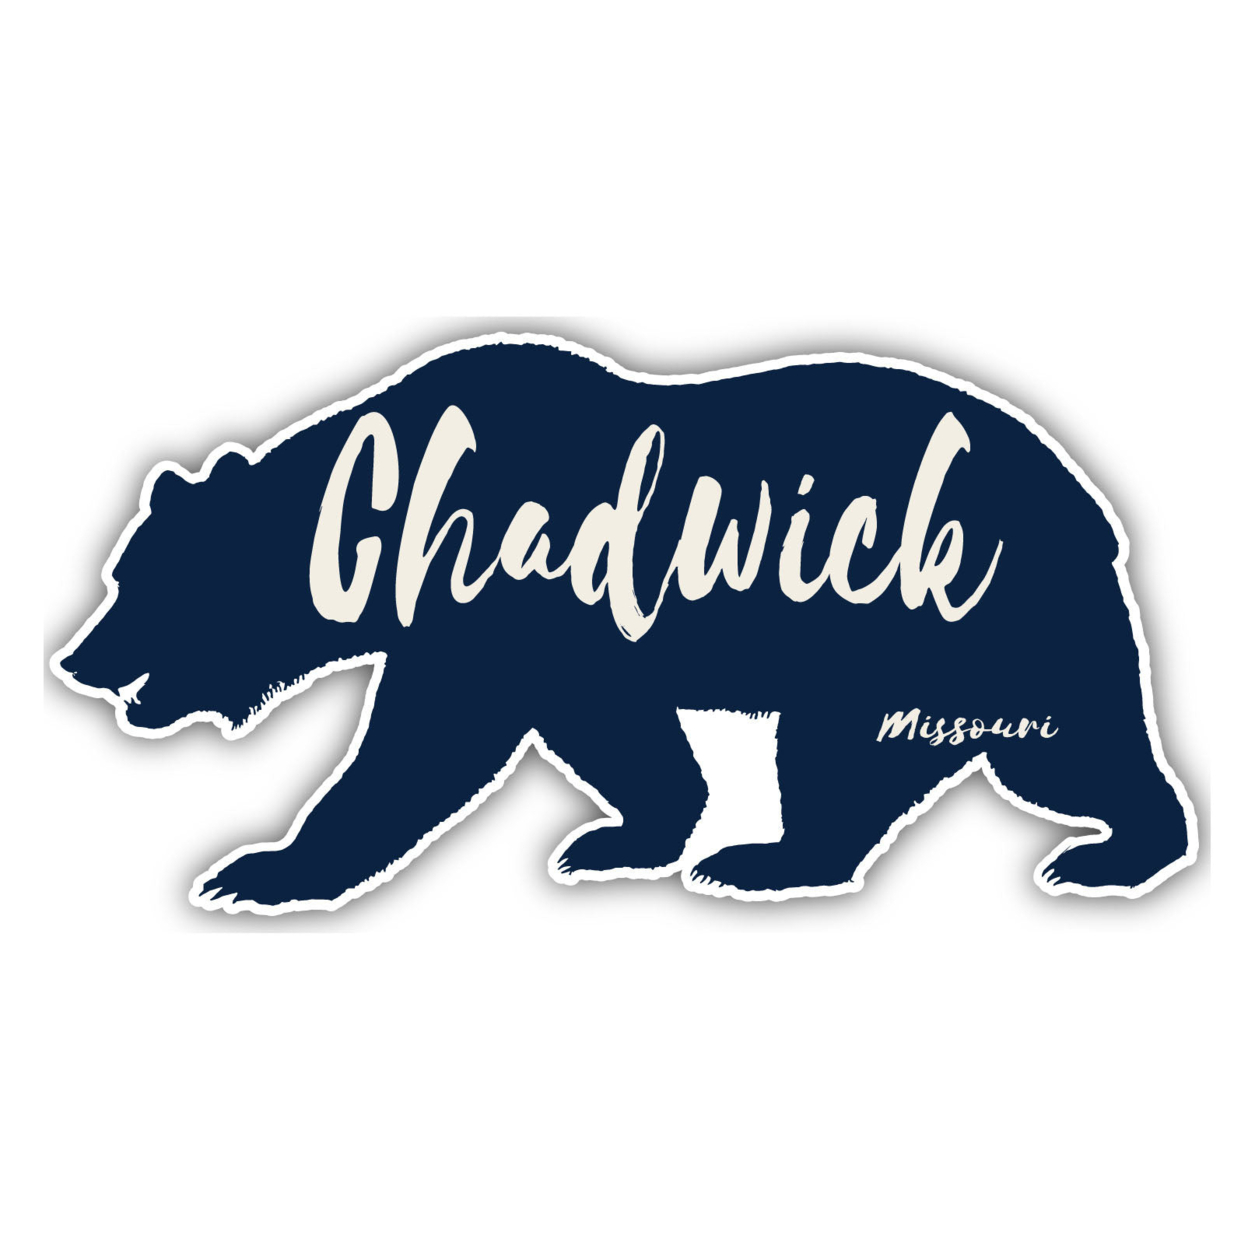 Chadwick Missouri Souvenir Decorative Stickers (Choose Theme And Size) - Single Unit, 10-Inch, Tent